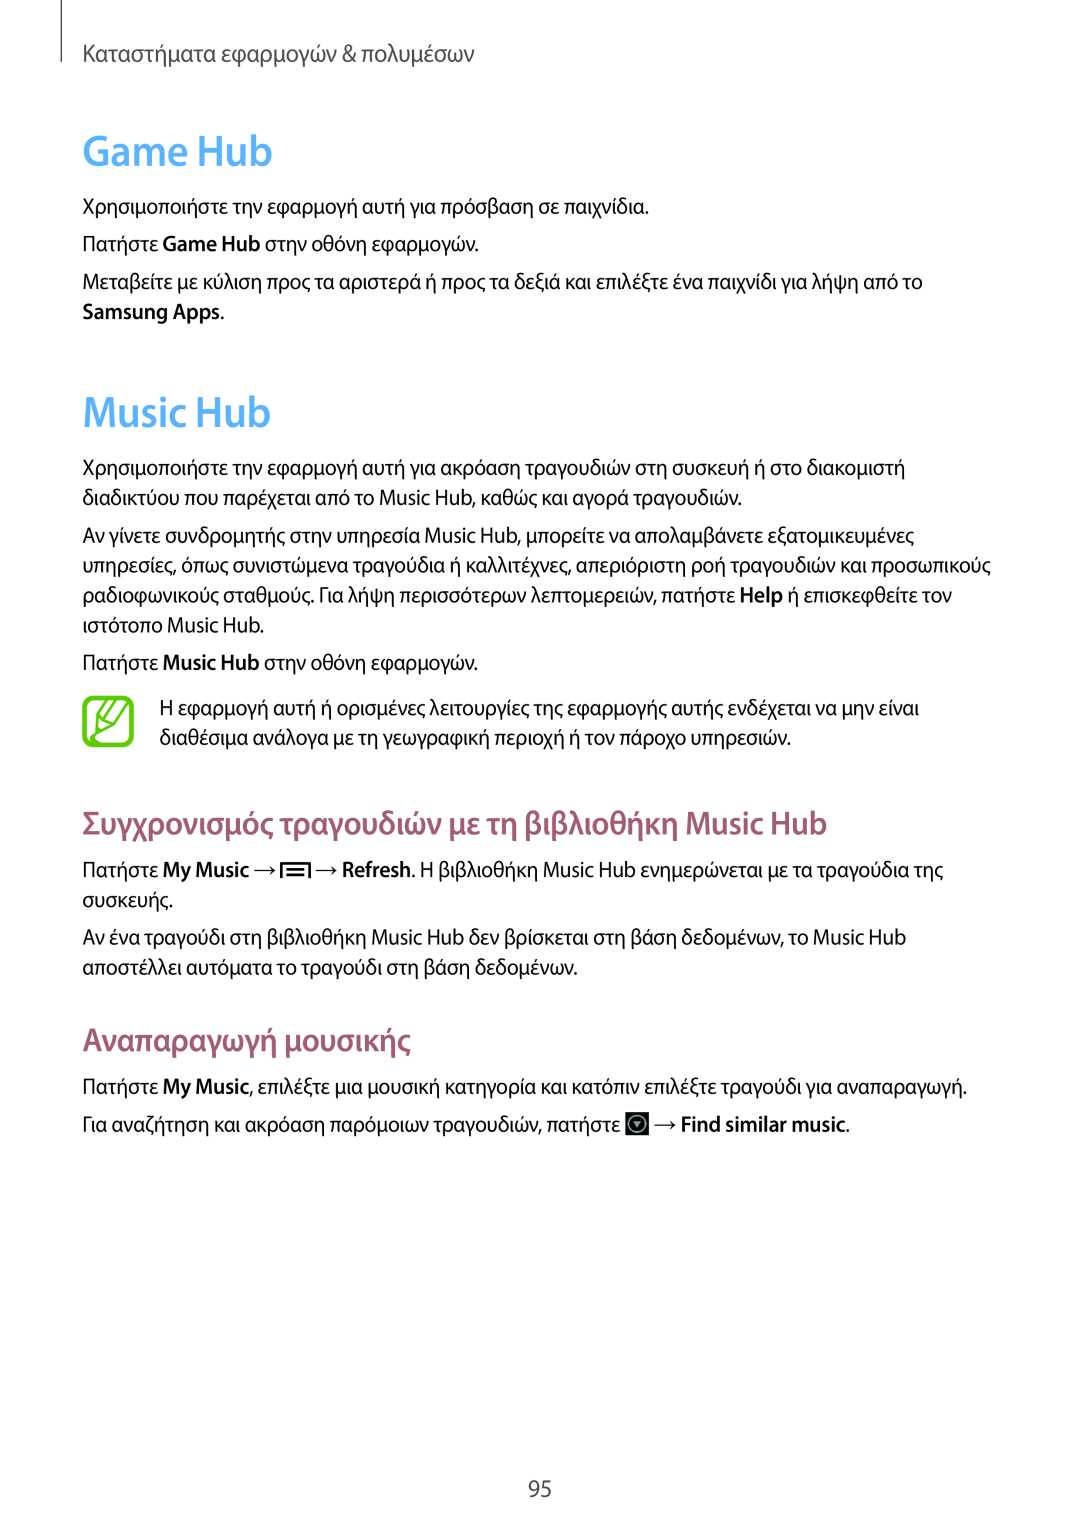 Samsung GT-N7100TAXEUR manual Game Hub, Συγχρονισμός τραγουδιών με τη βιβλιοθήκη Music Hub, Αναπαραγωγή μουσικής 